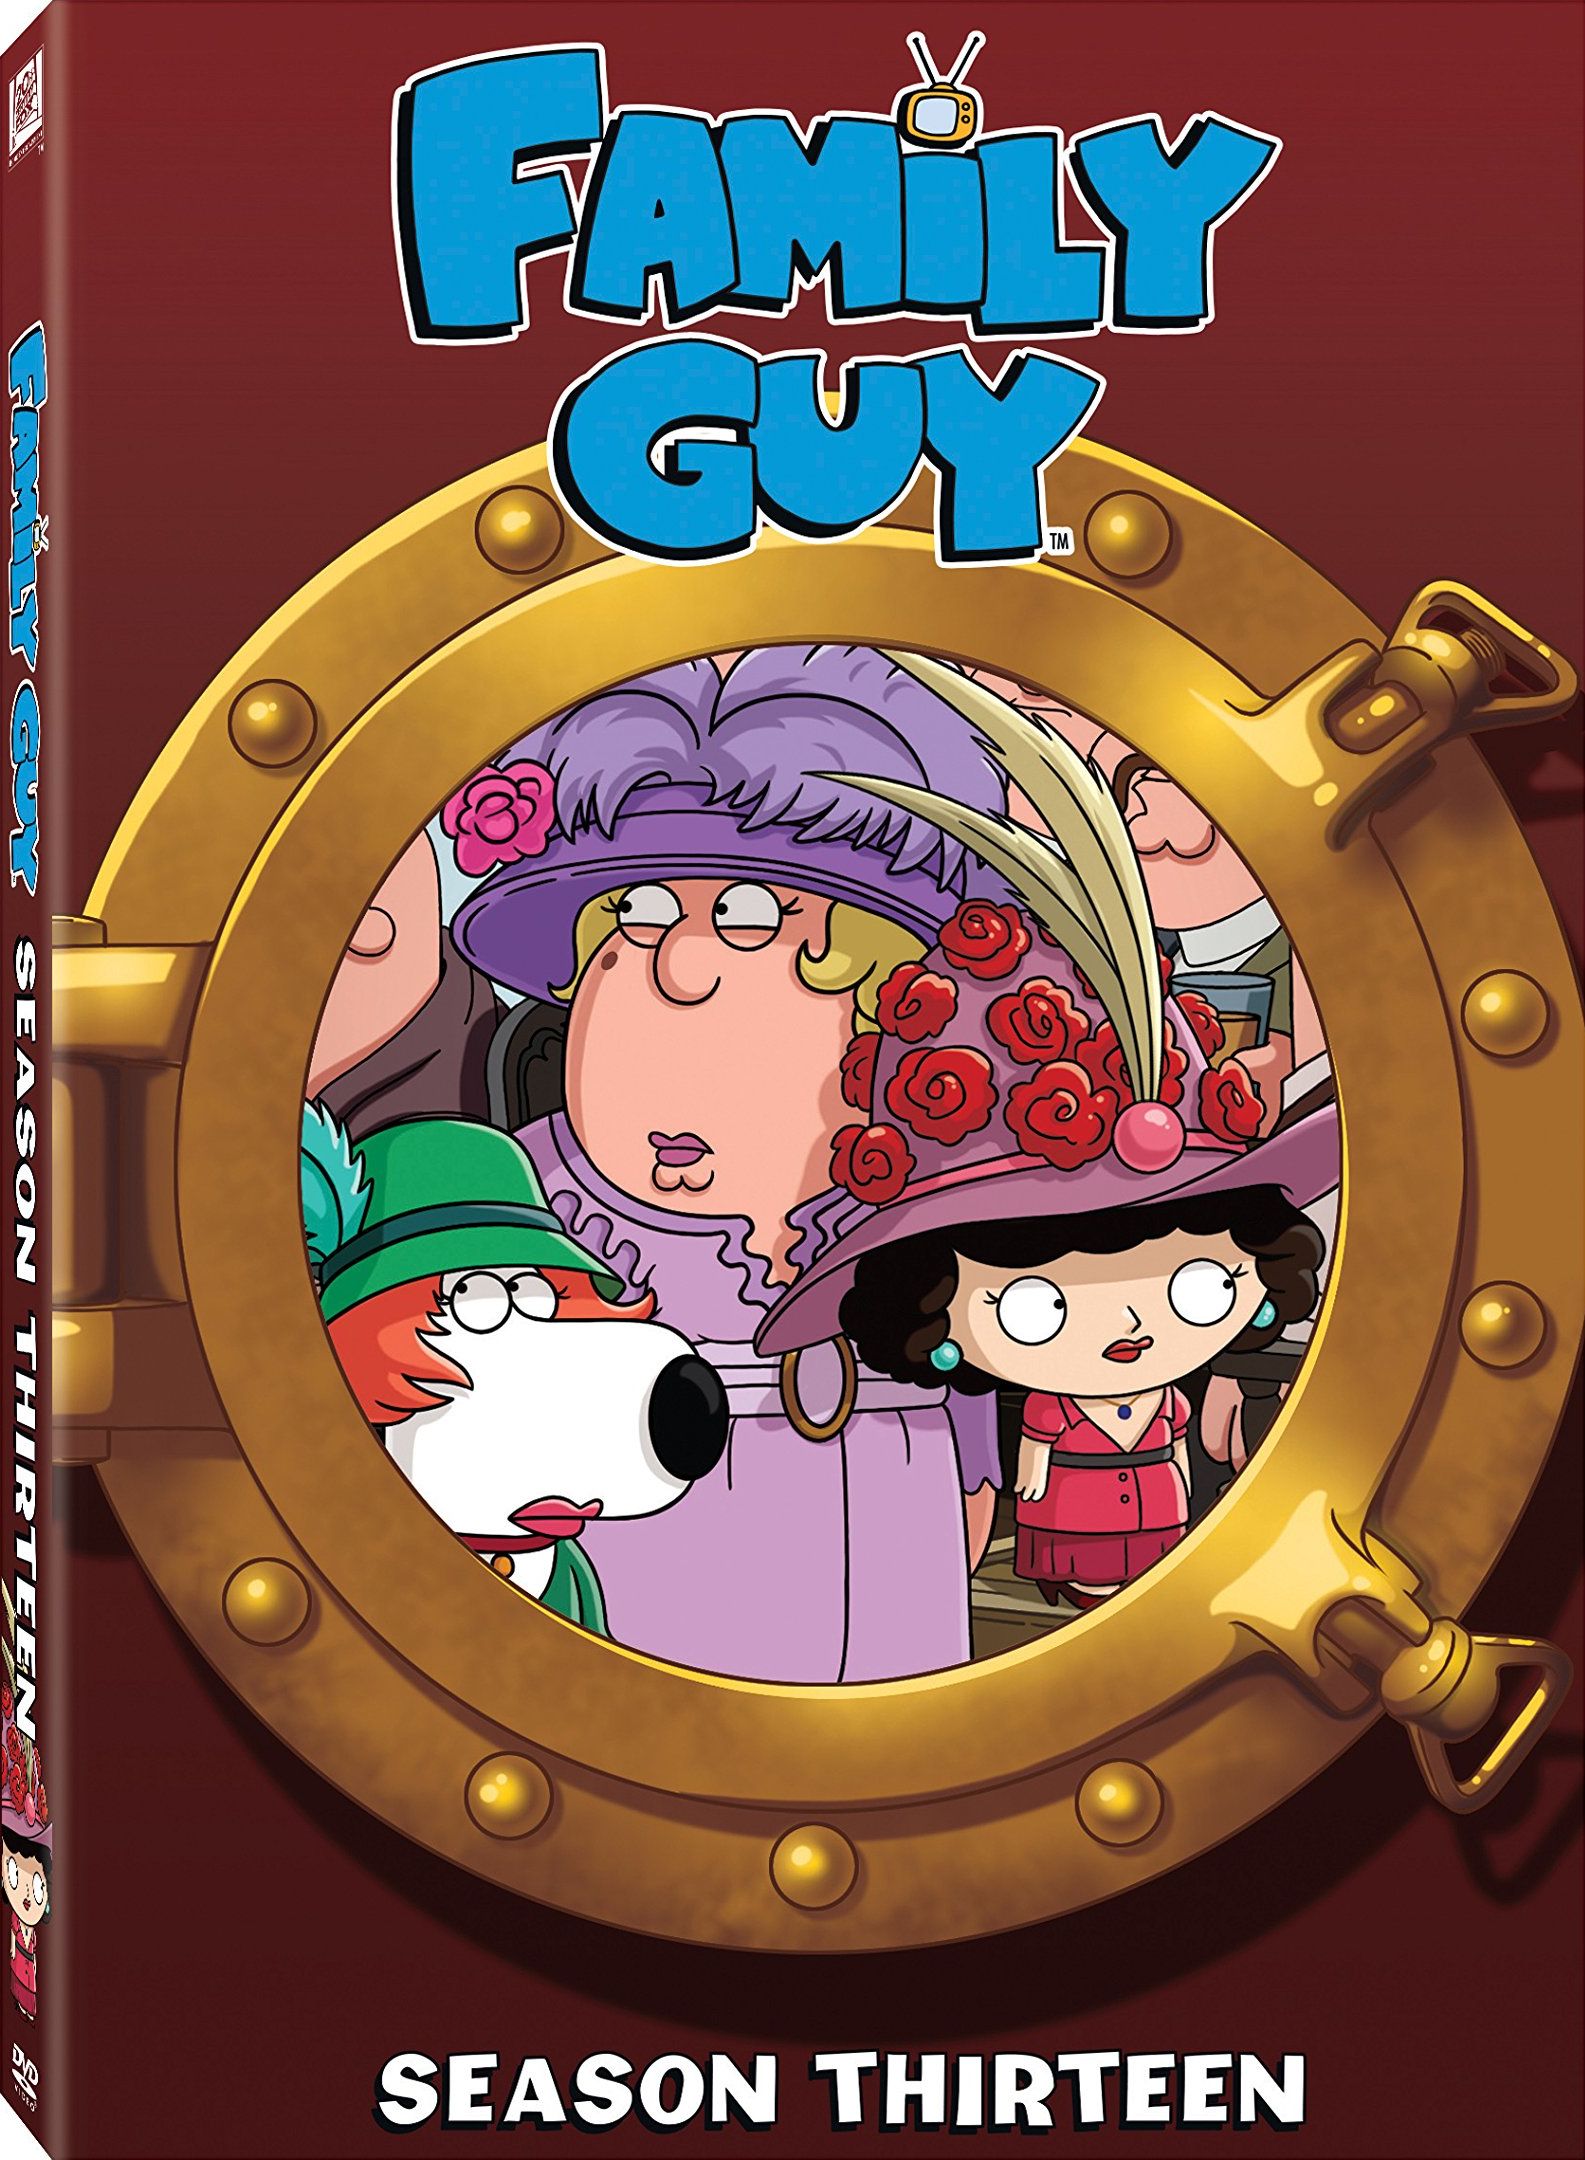 Family Guy DVD Release Date